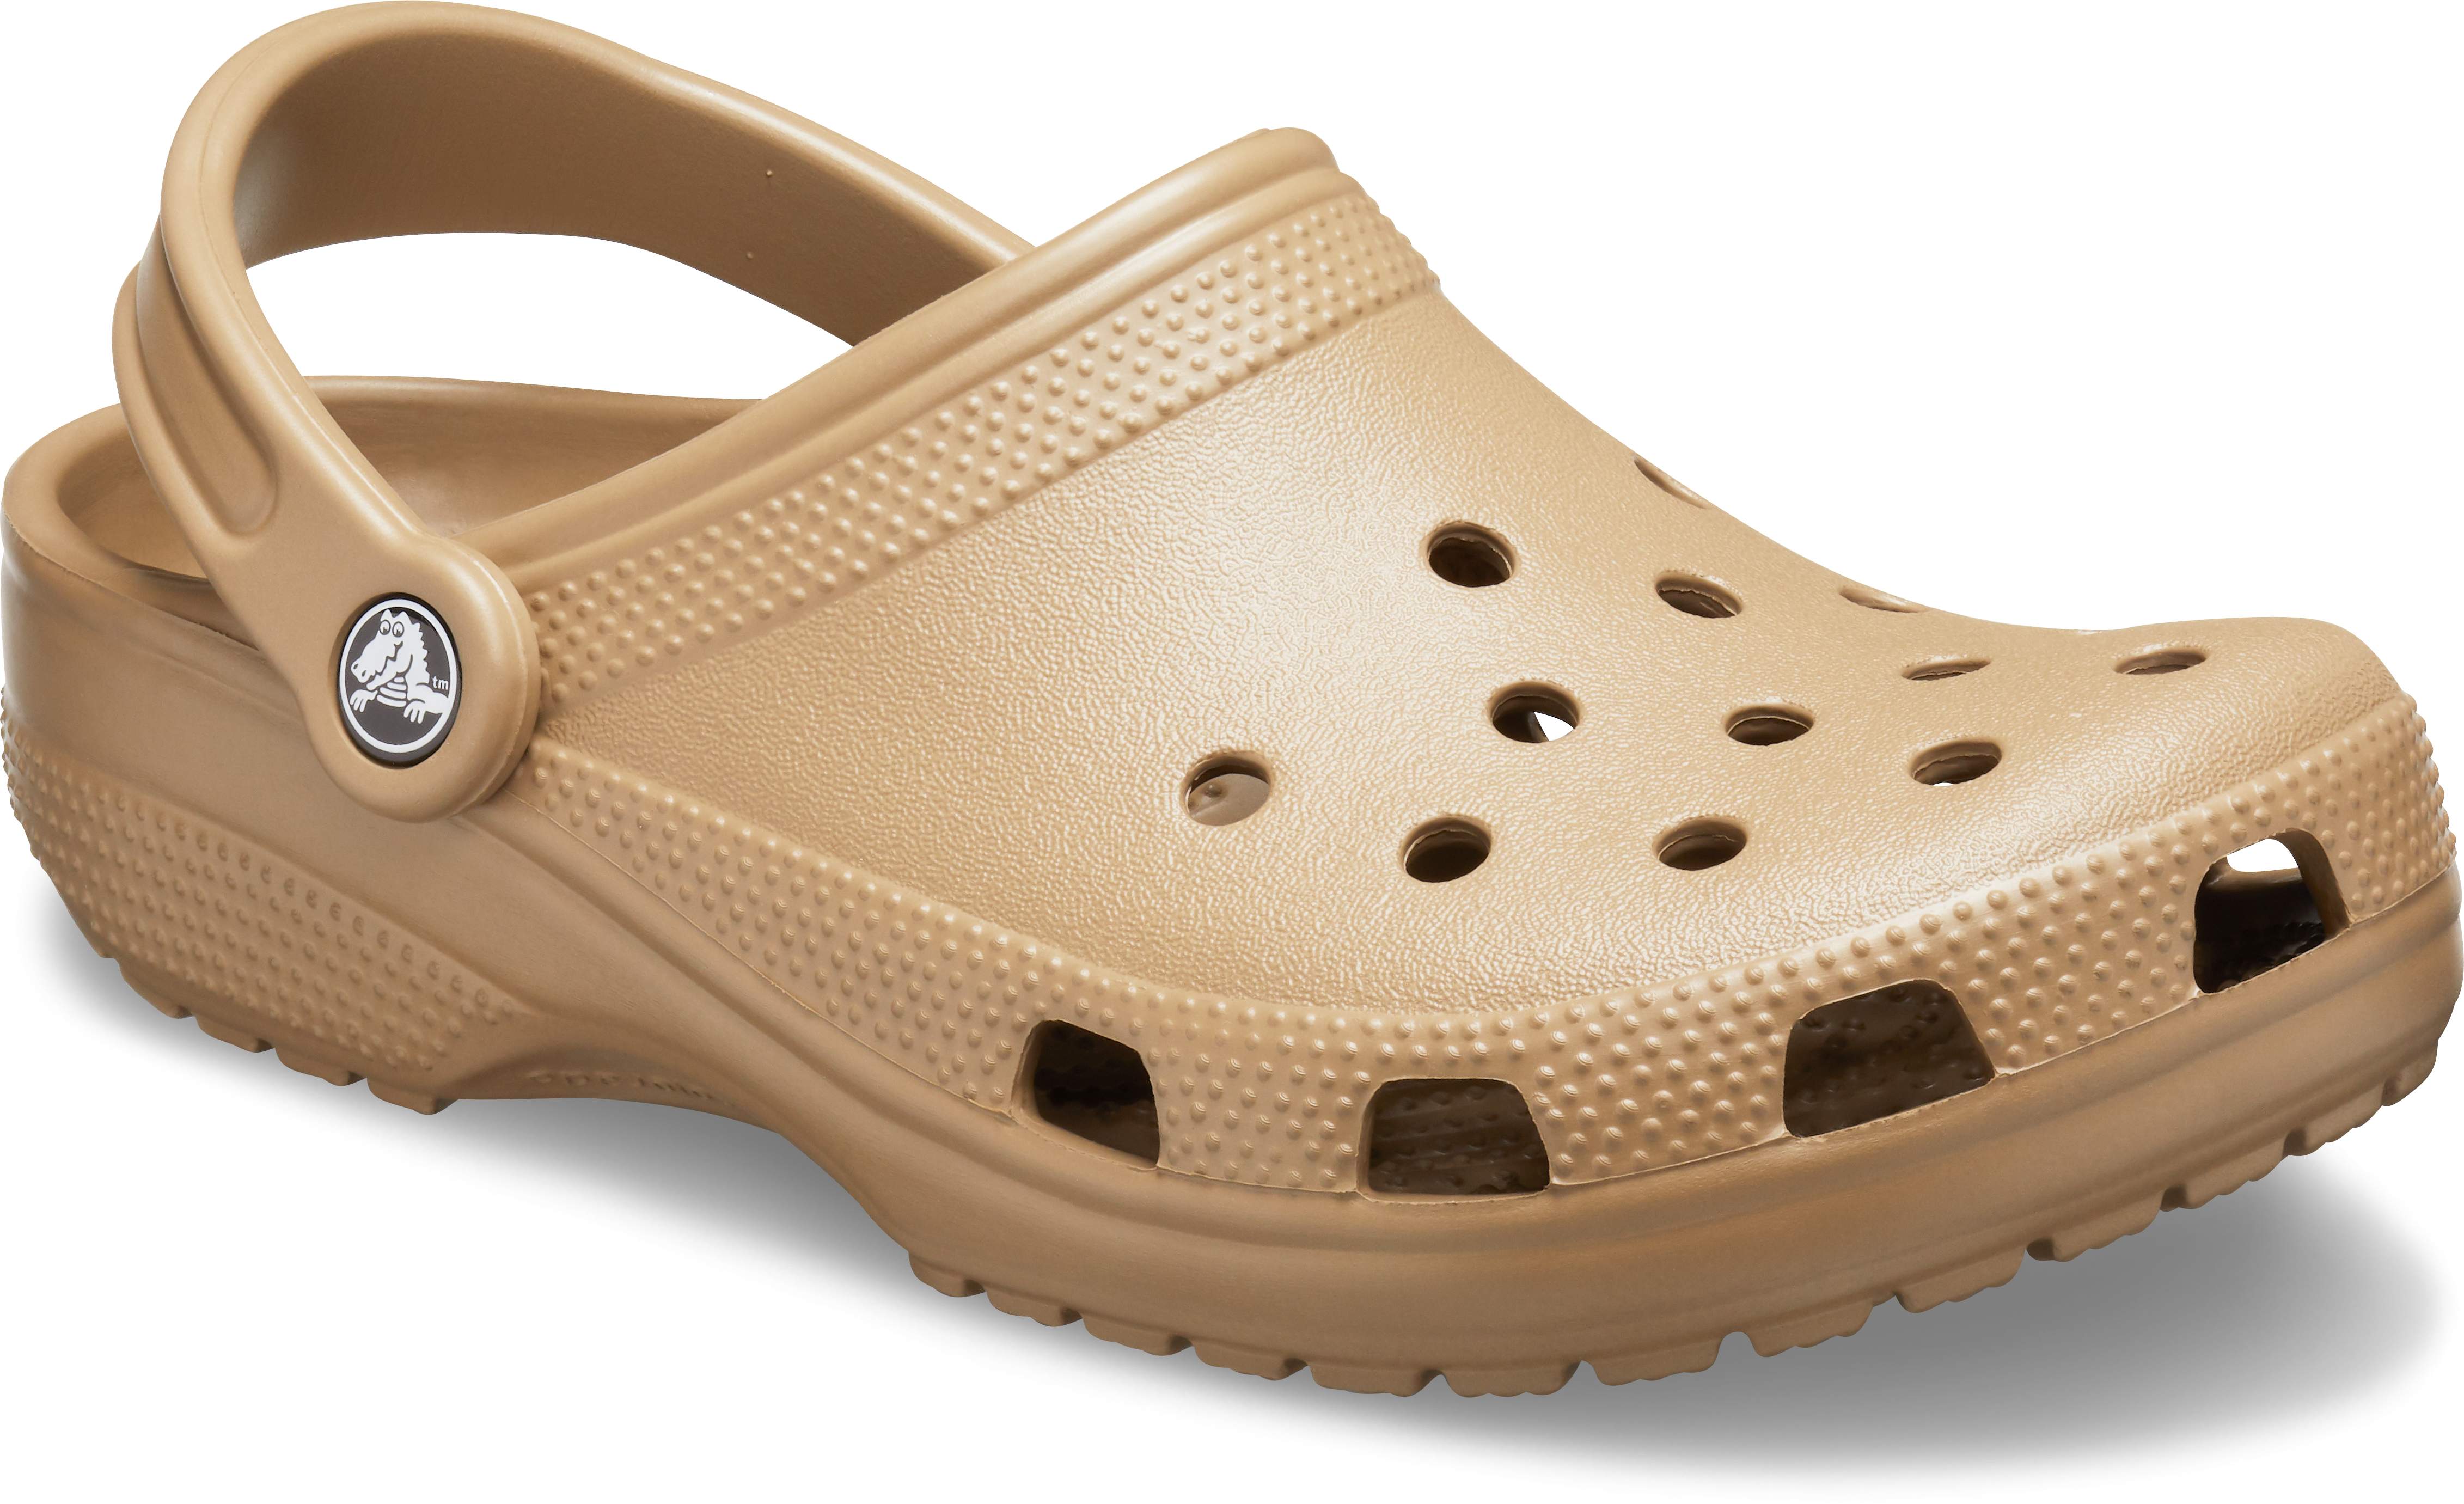 wearing crocs for plantar fasciitis pain